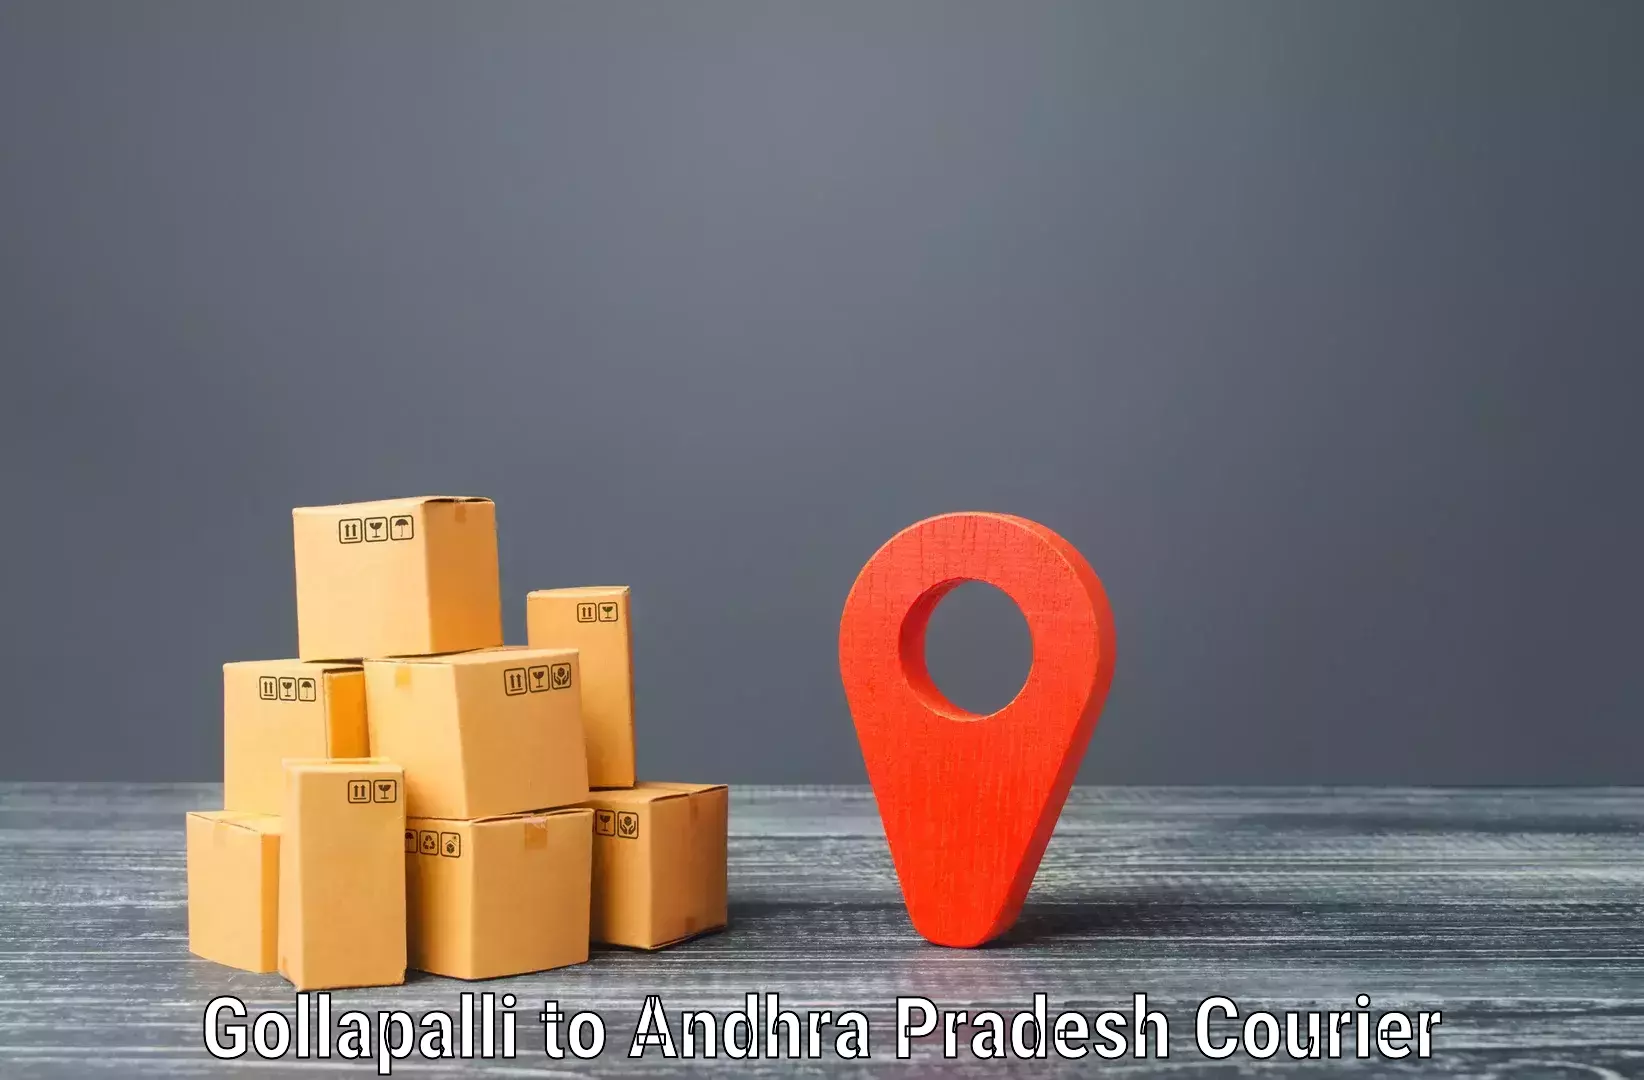 Delivery service partnership Gollapalli to Chodavaram